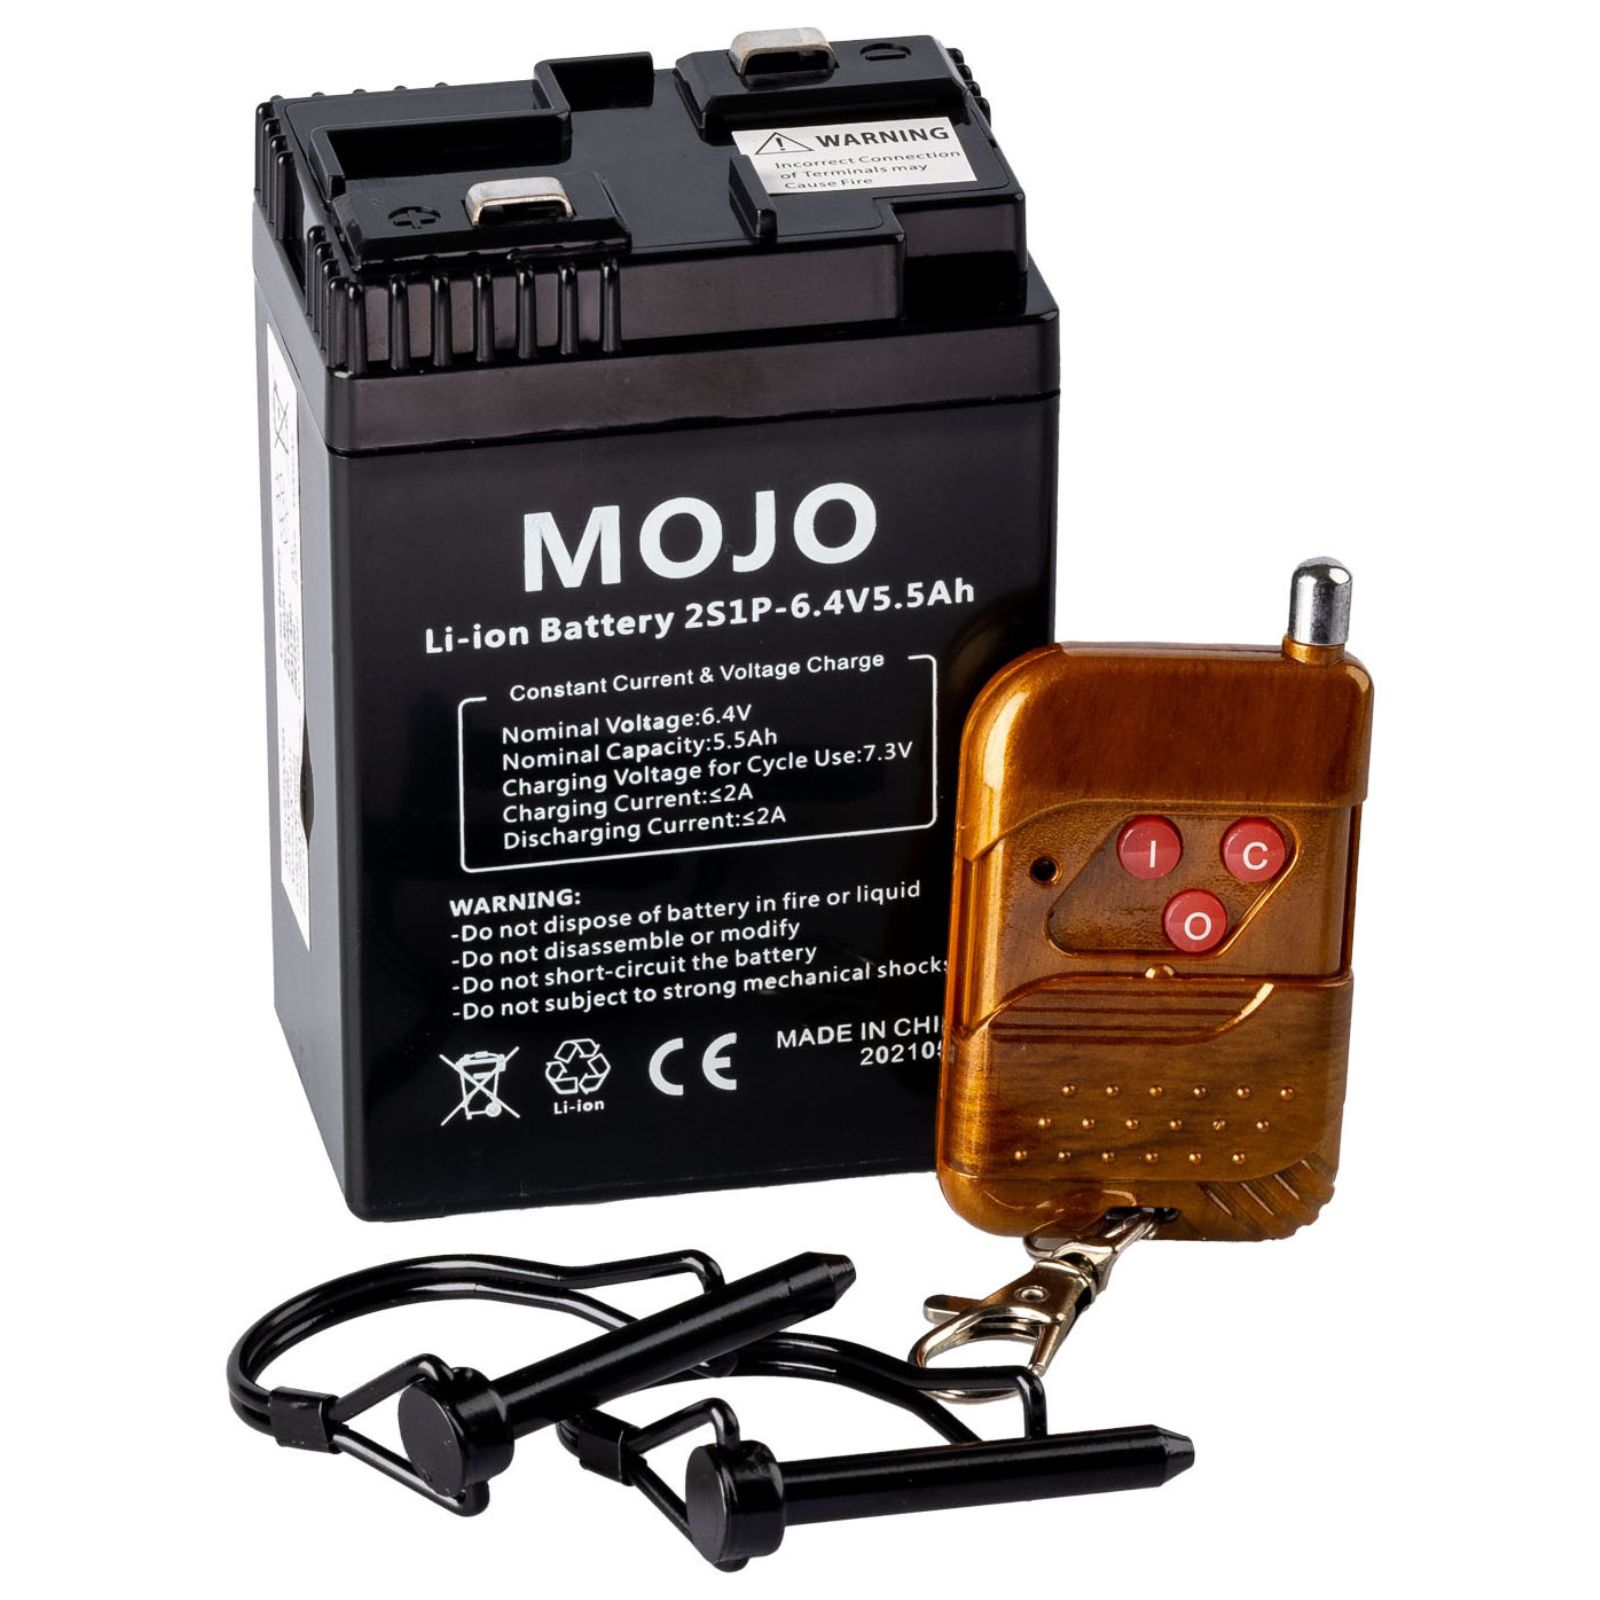 Mojo ES King Mallard mit Lio-Ion Batterie